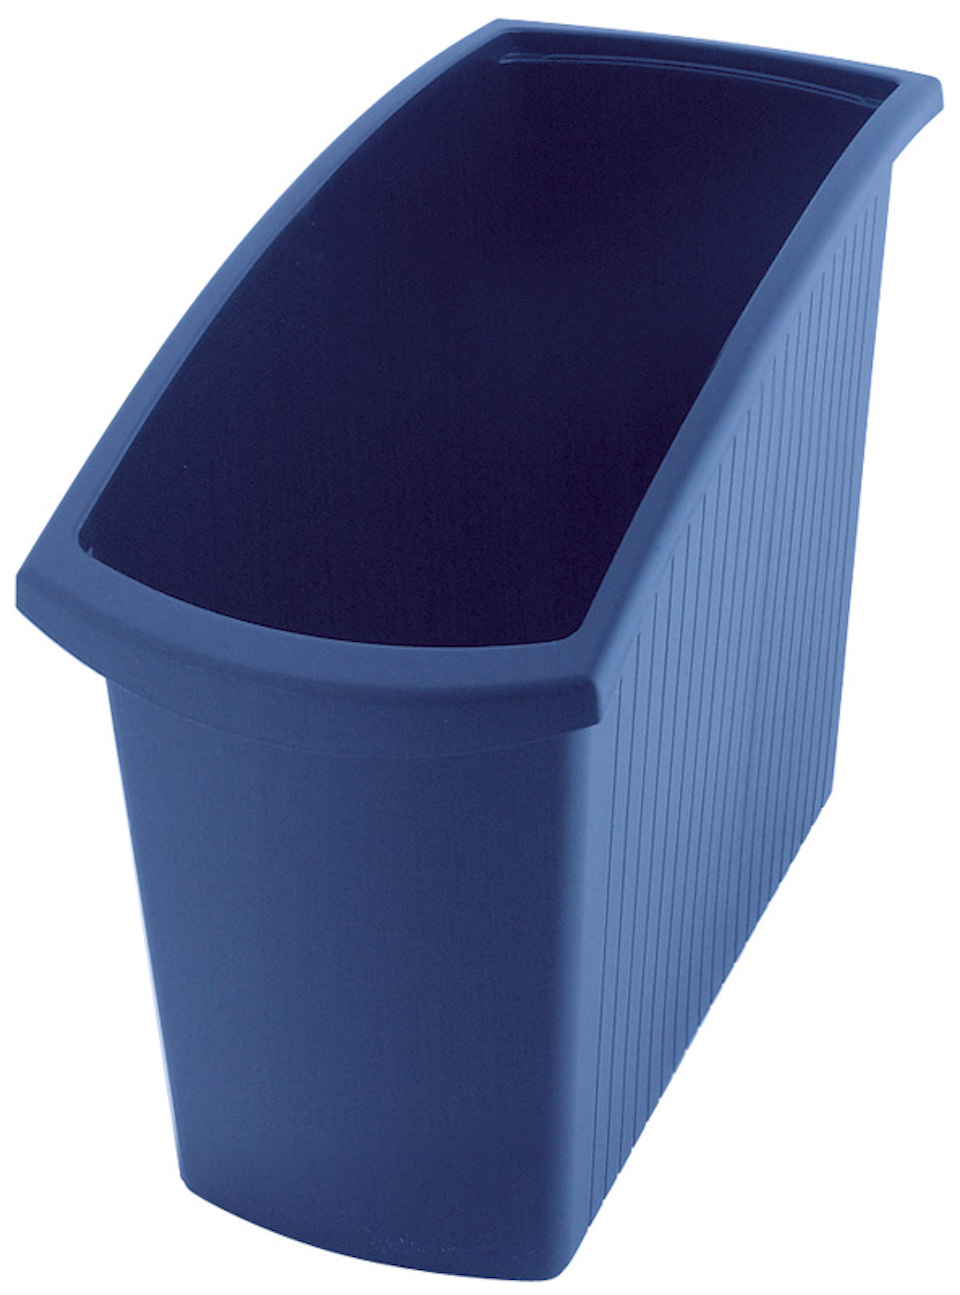 Rechteckiger Kunstoff Papierkorb | 18 Liter, HxBxT 34,5x19,4x45cm | Blau